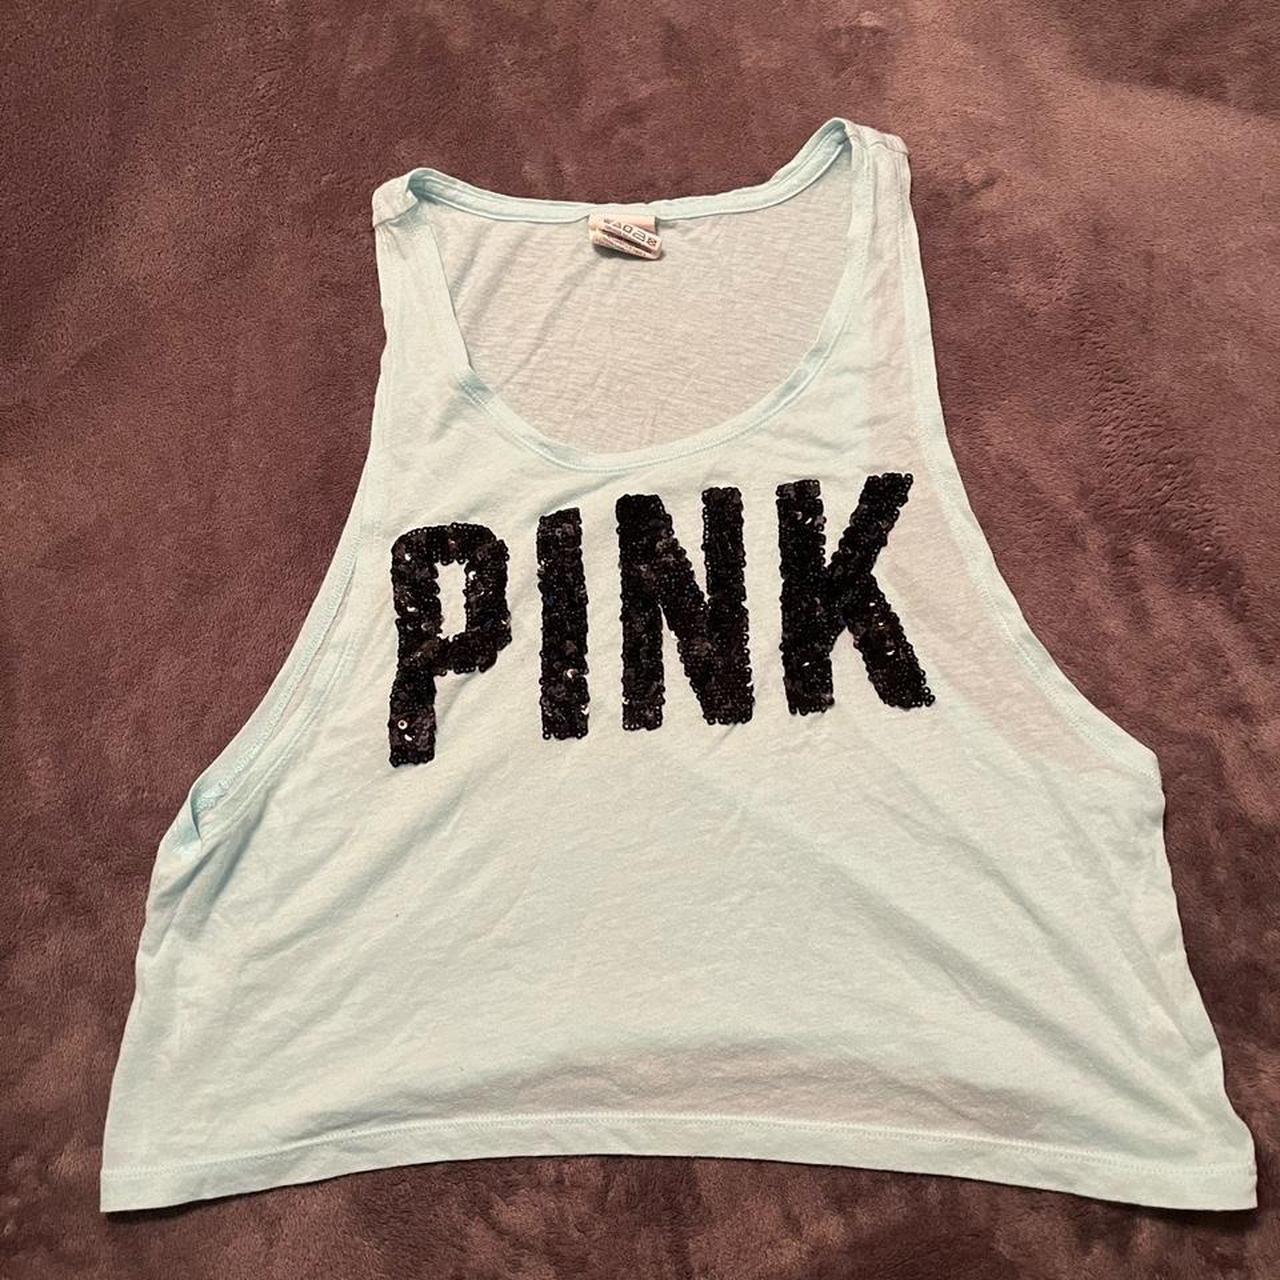 Victoria Secret's Pink tank top, worn a few times - Depop